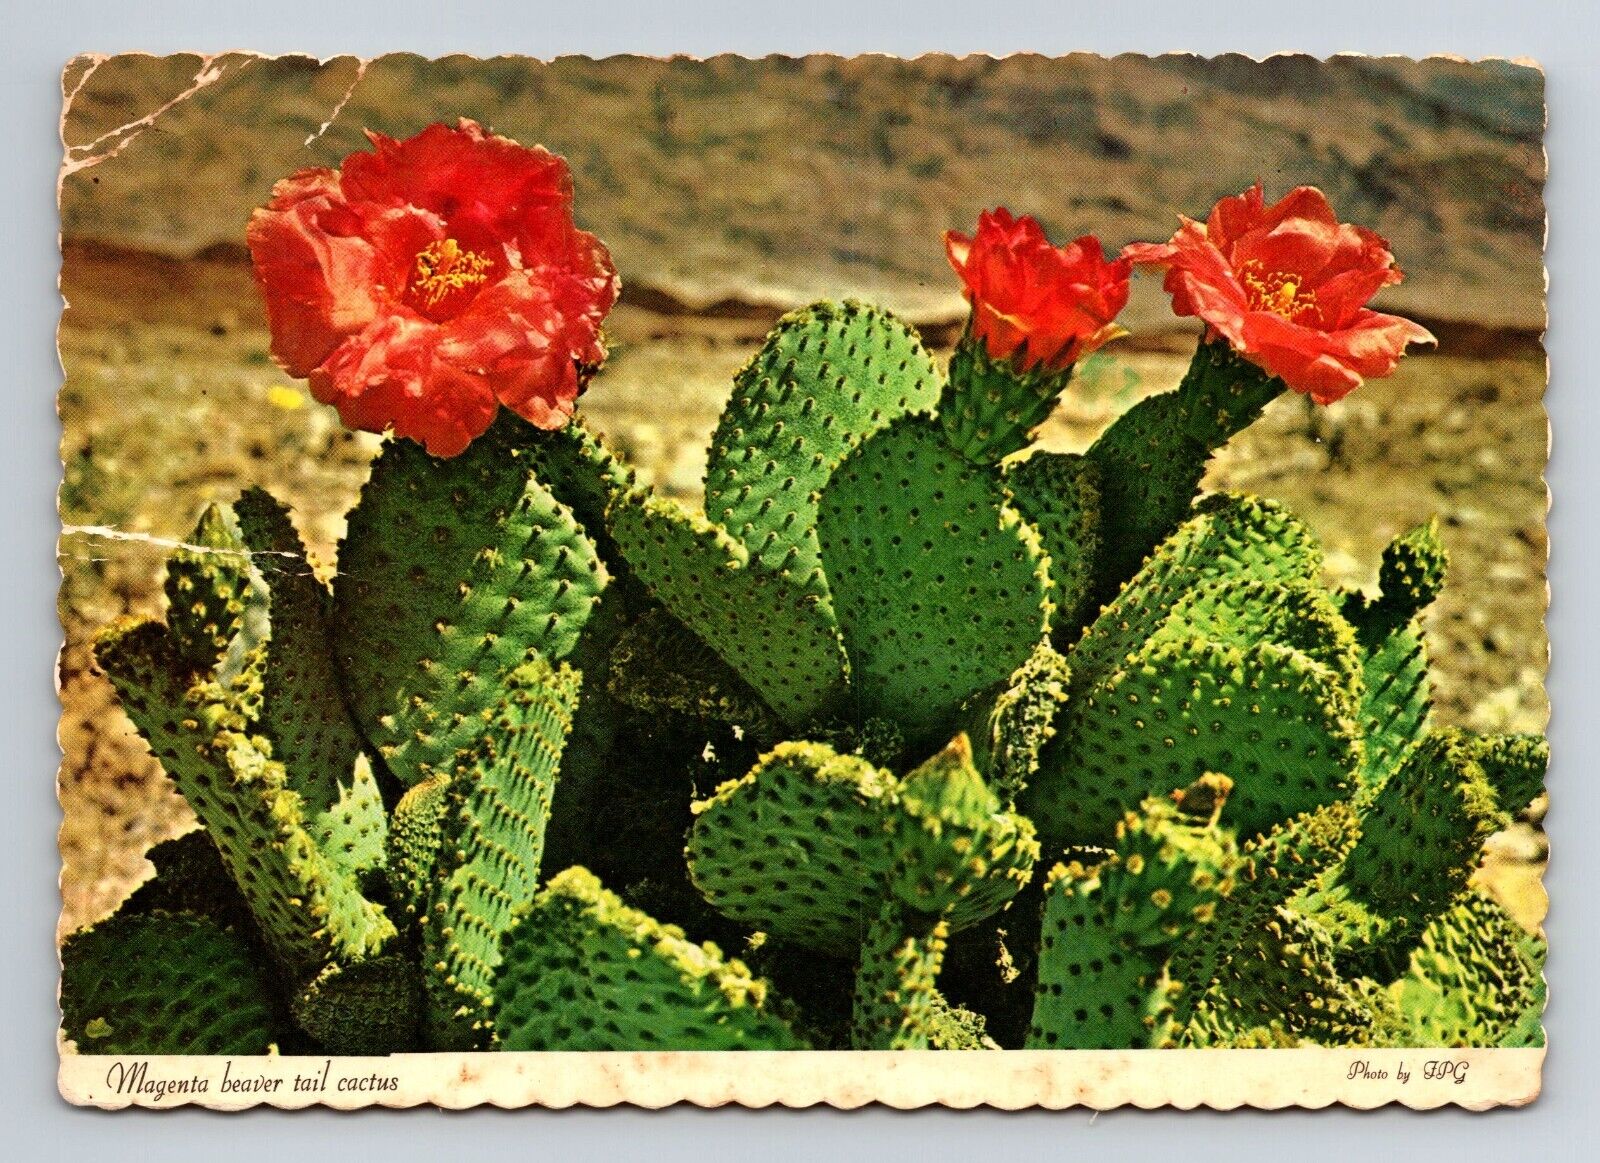 Vtg post card 5 3/4 x 4 1/8 inch blooming cactus in desert